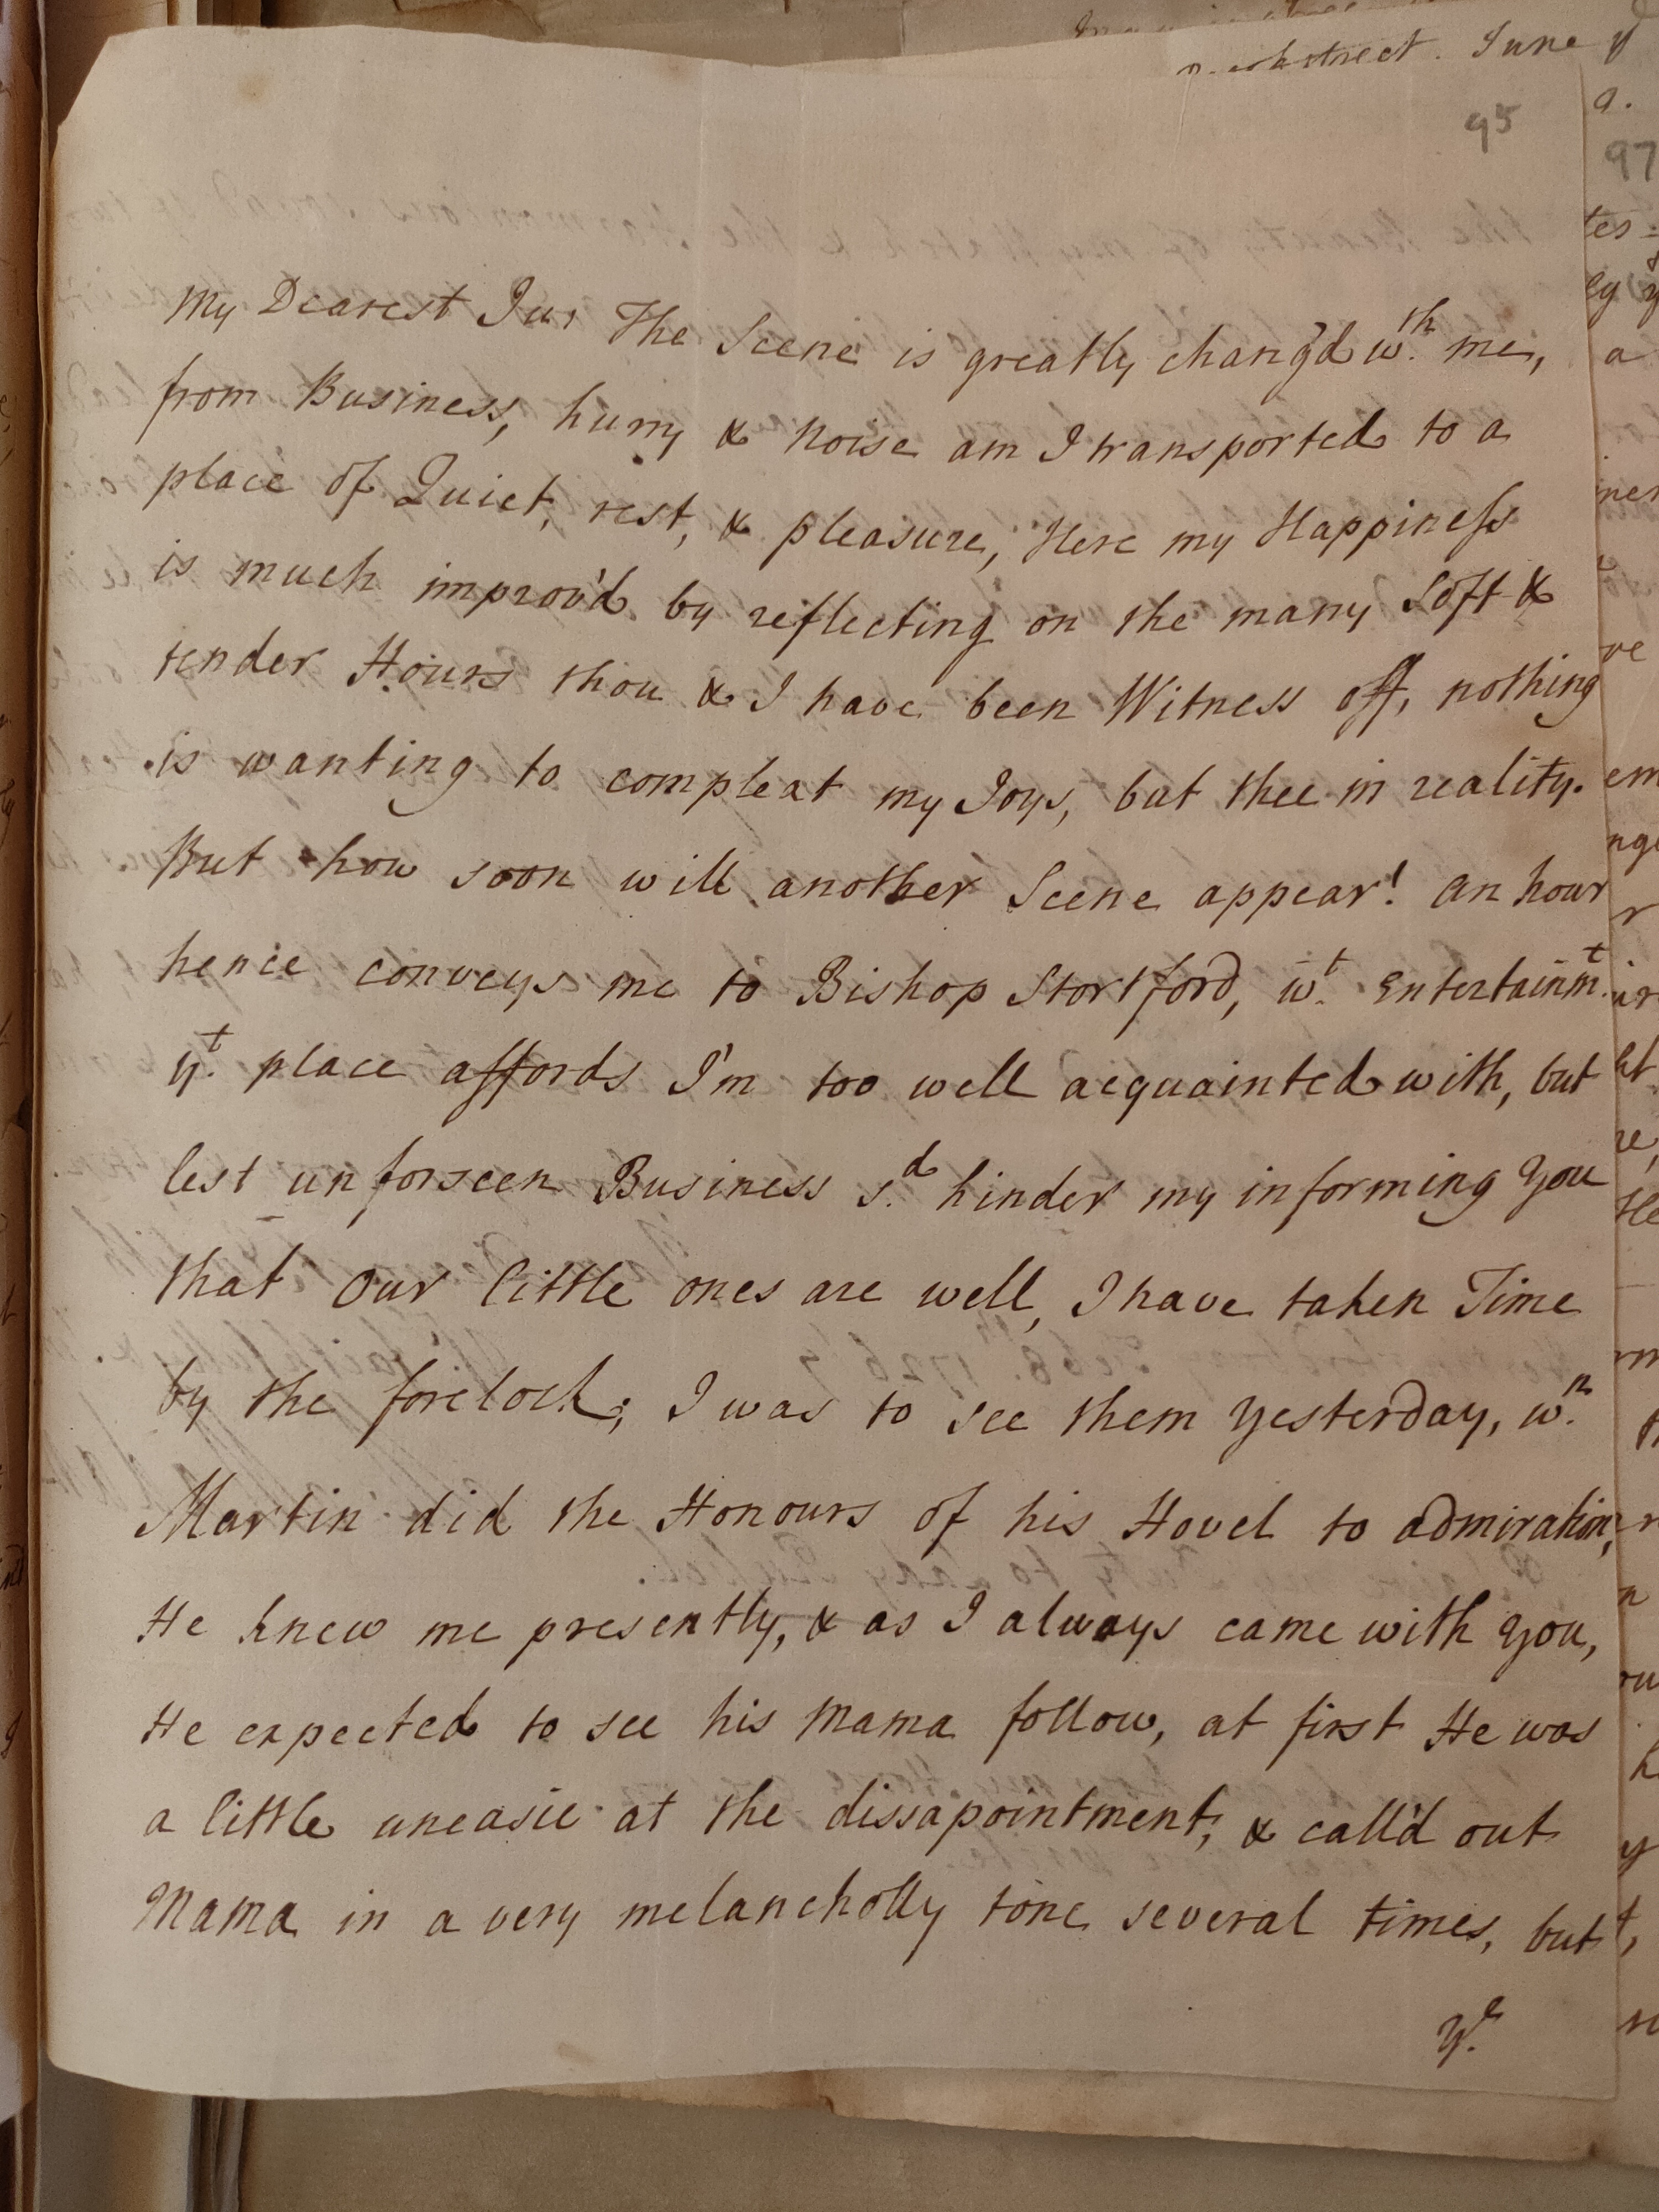 Image #1 of letter: Martin Madan to Judith Madan, 8 February 1727